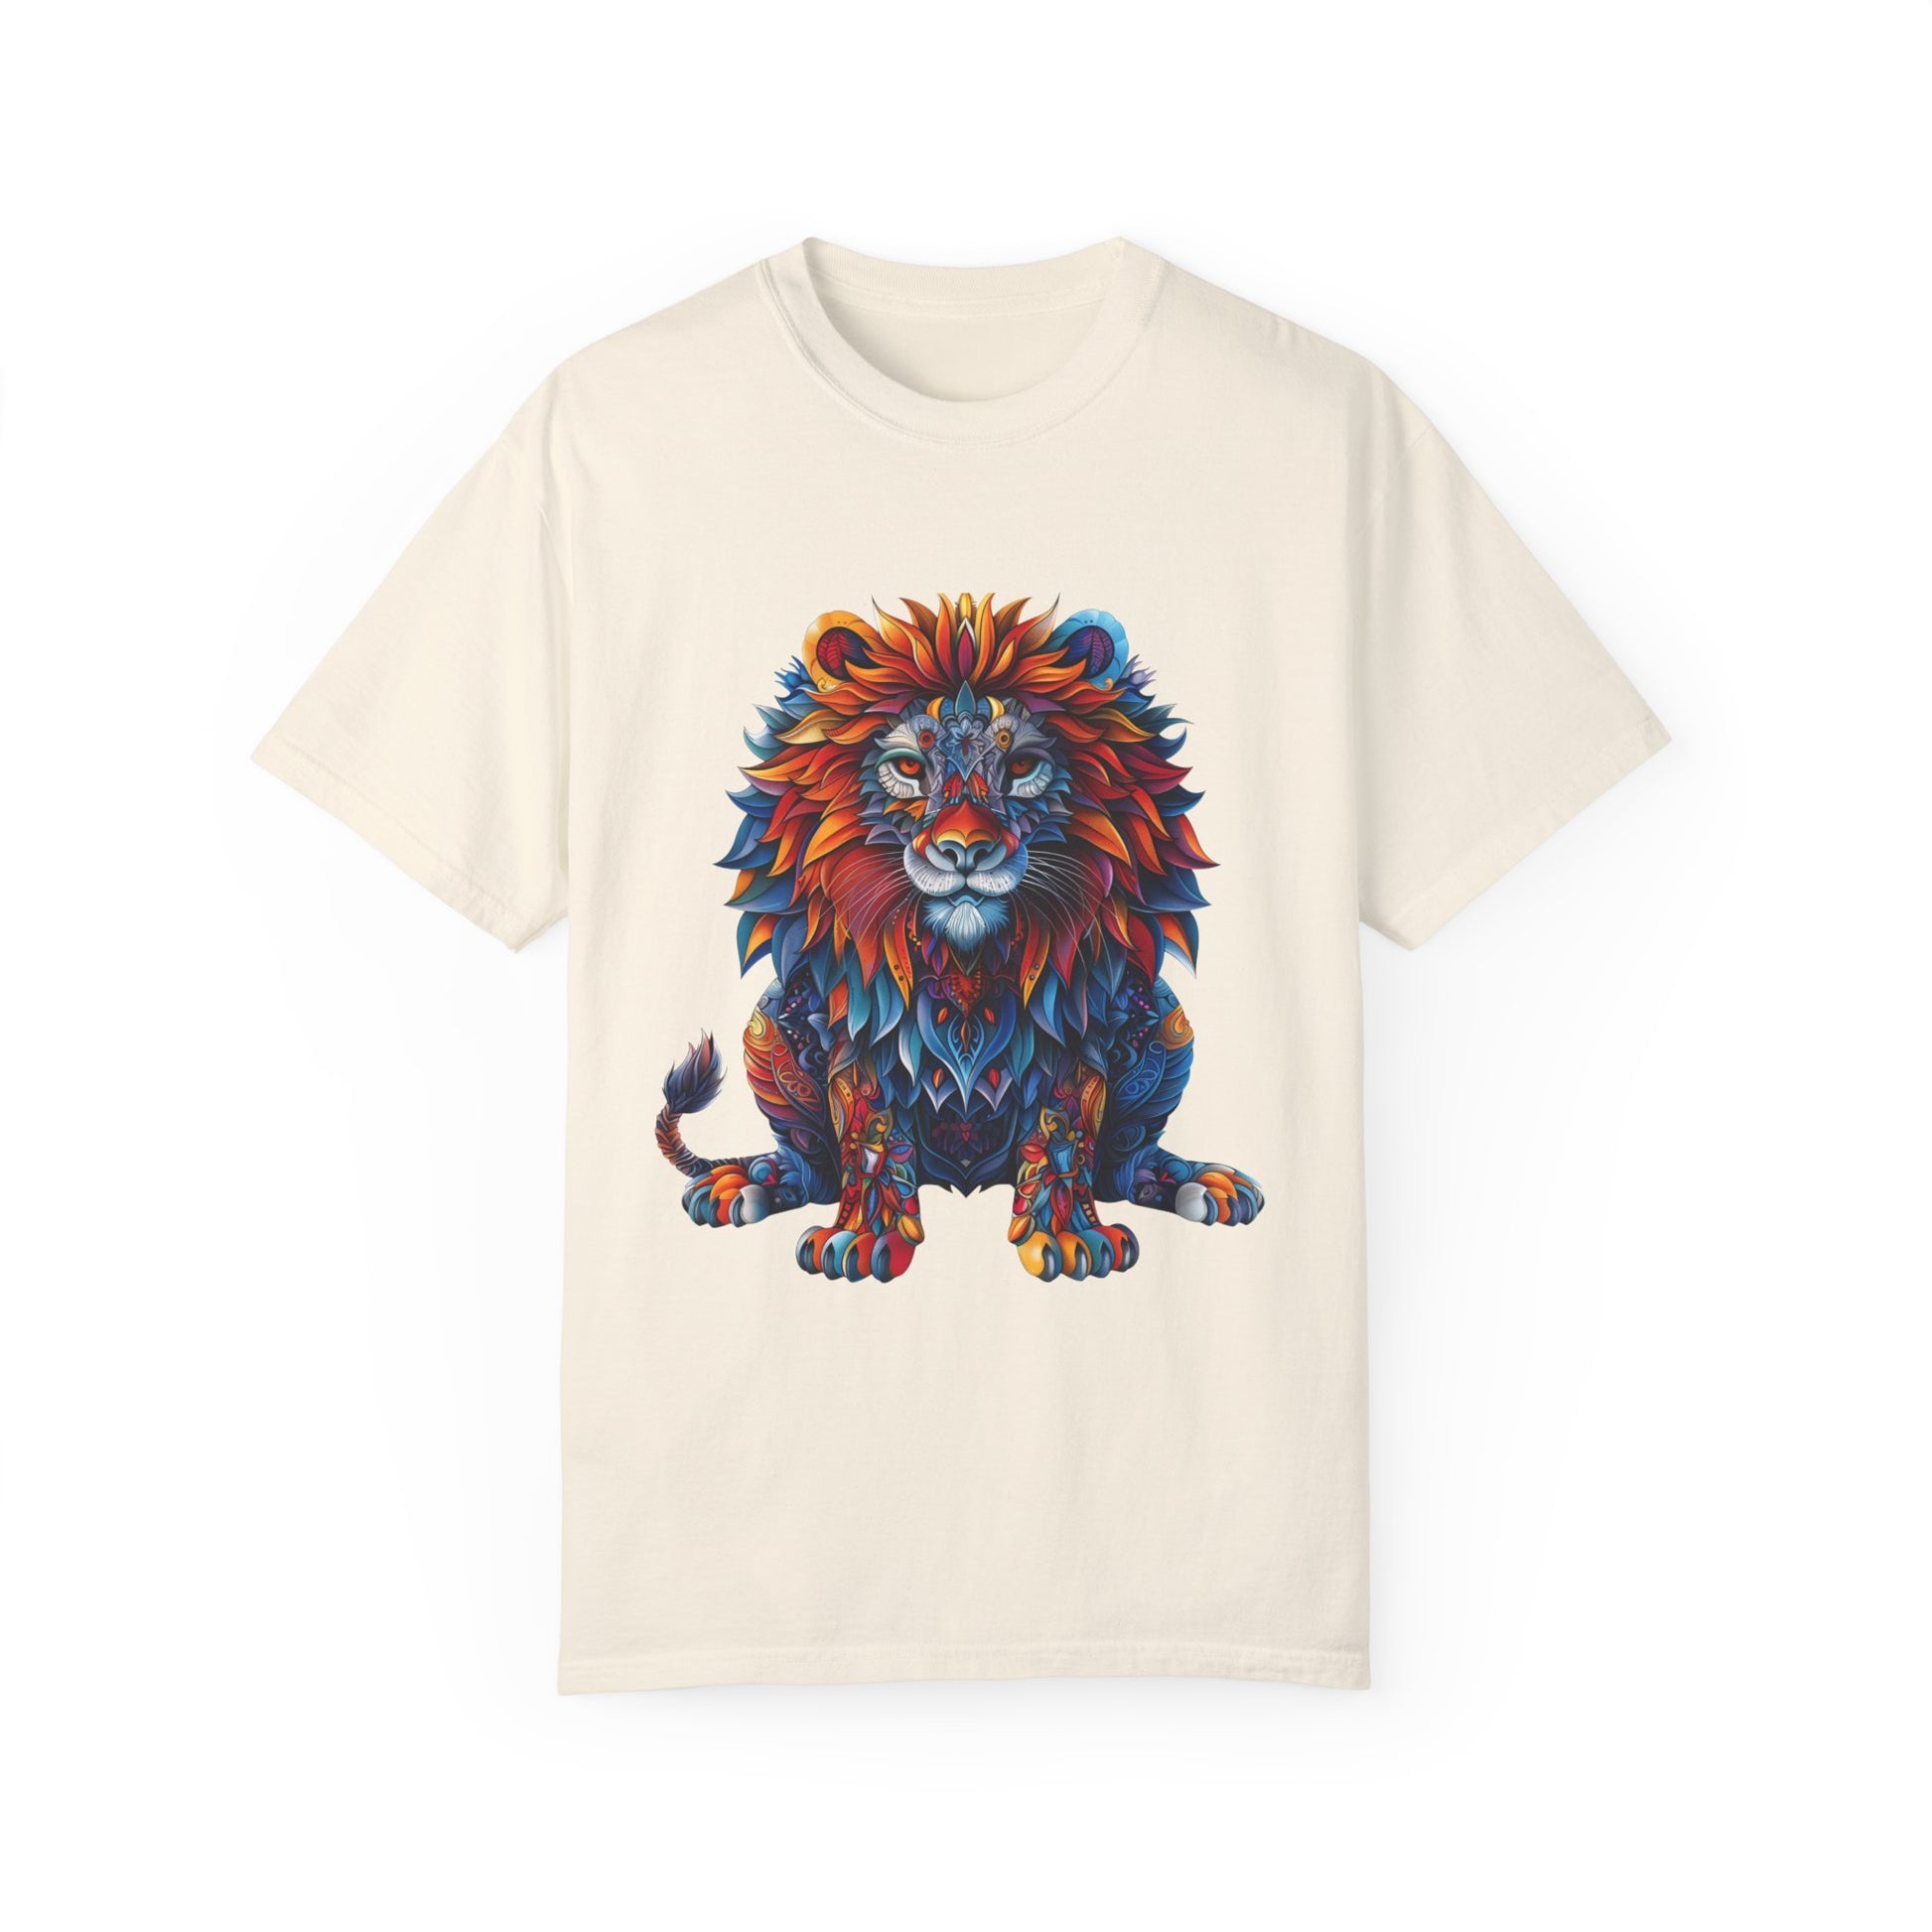 Lion Head Cool Graphic Design Novelty Unisex Garment-dyed T-shirt Cotton Funny Humorous Graphic Soft Premium Unisex Men Women Ivory T-shirt Birthday Gift-10